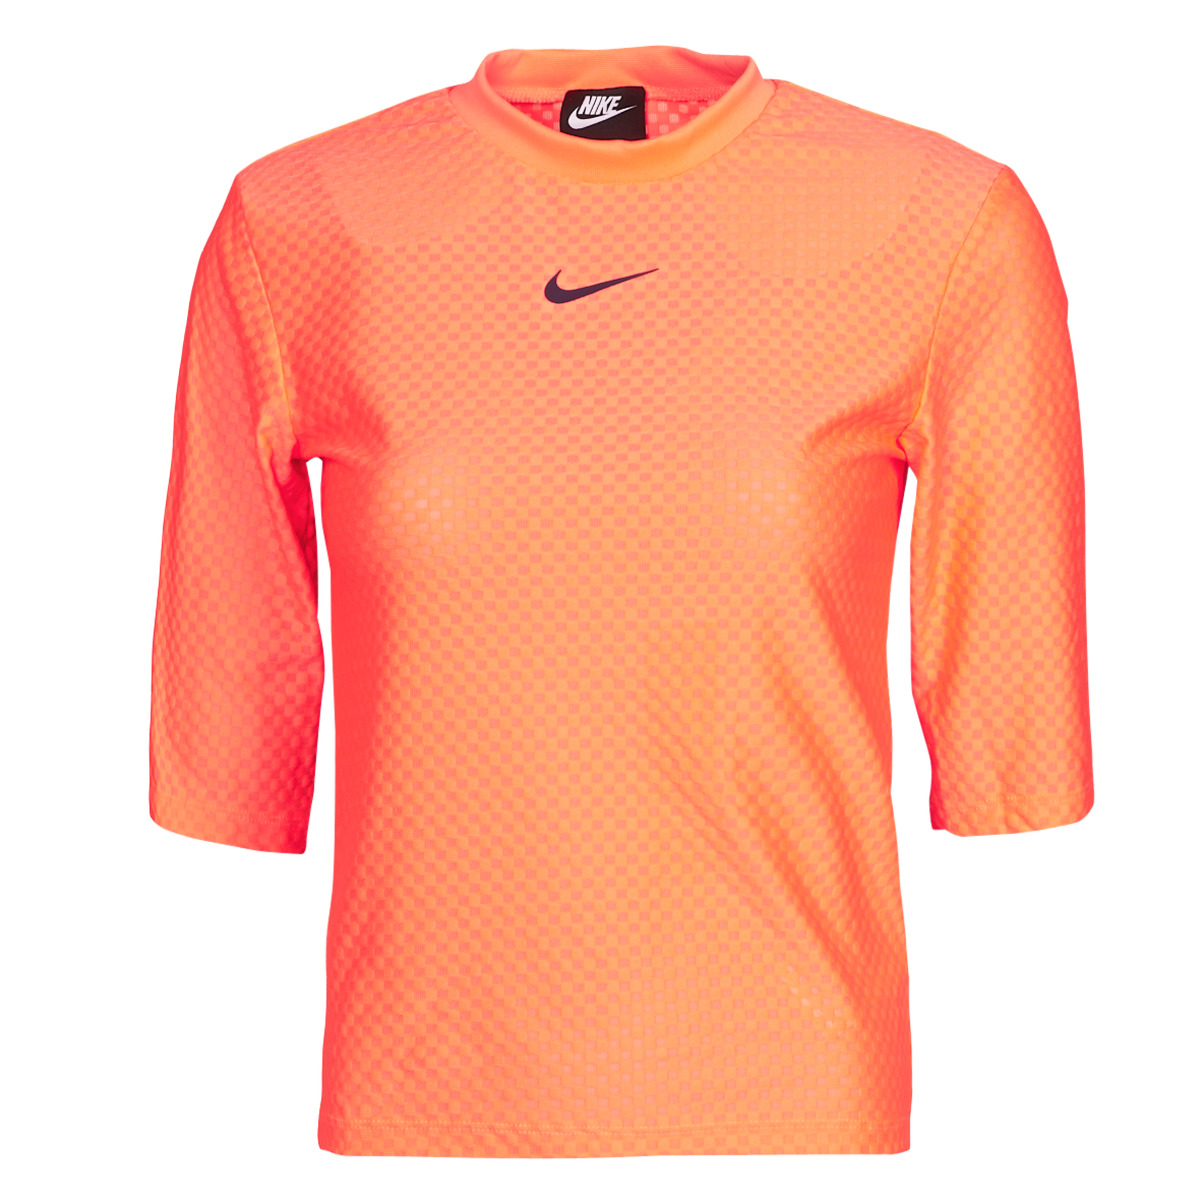 vaatteet Naiset Lyhythihainen t-paita Nike NSICN CLSH TOP SS MESH Oranssi